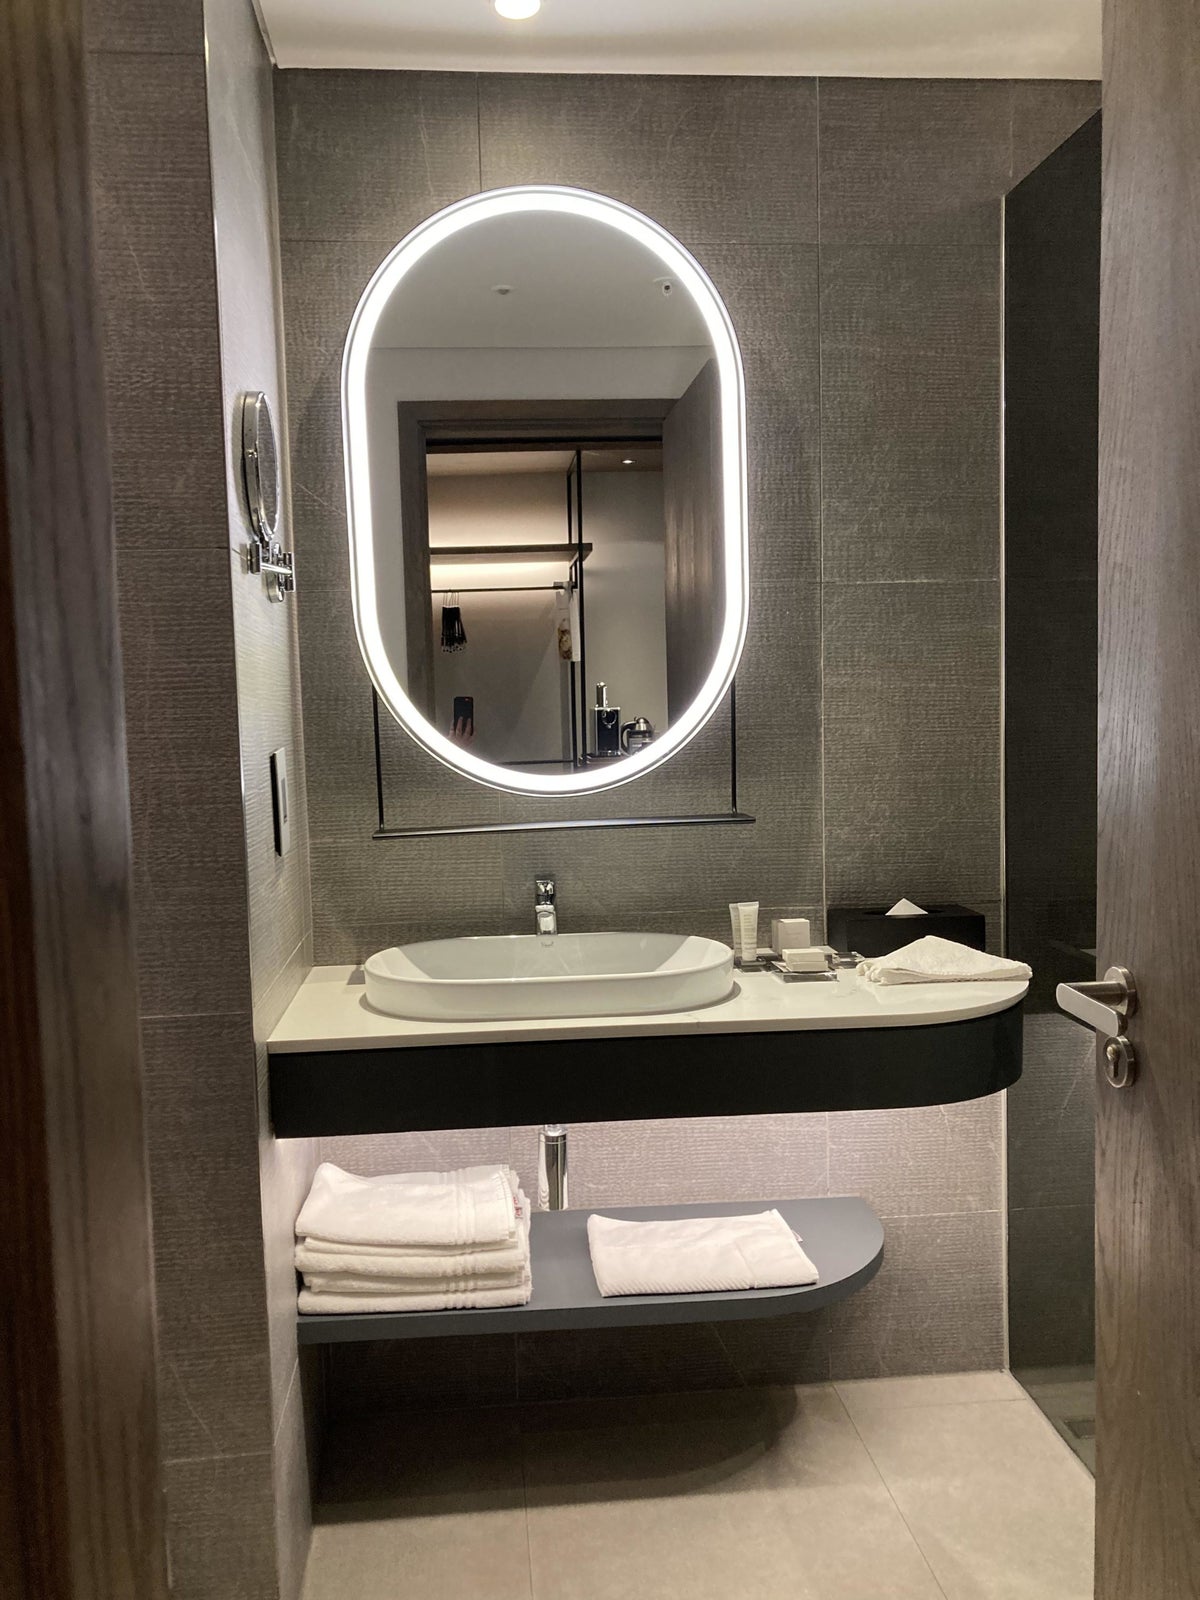 Johannesburg Marriott Hotel Melrose Arch bathroom vanity